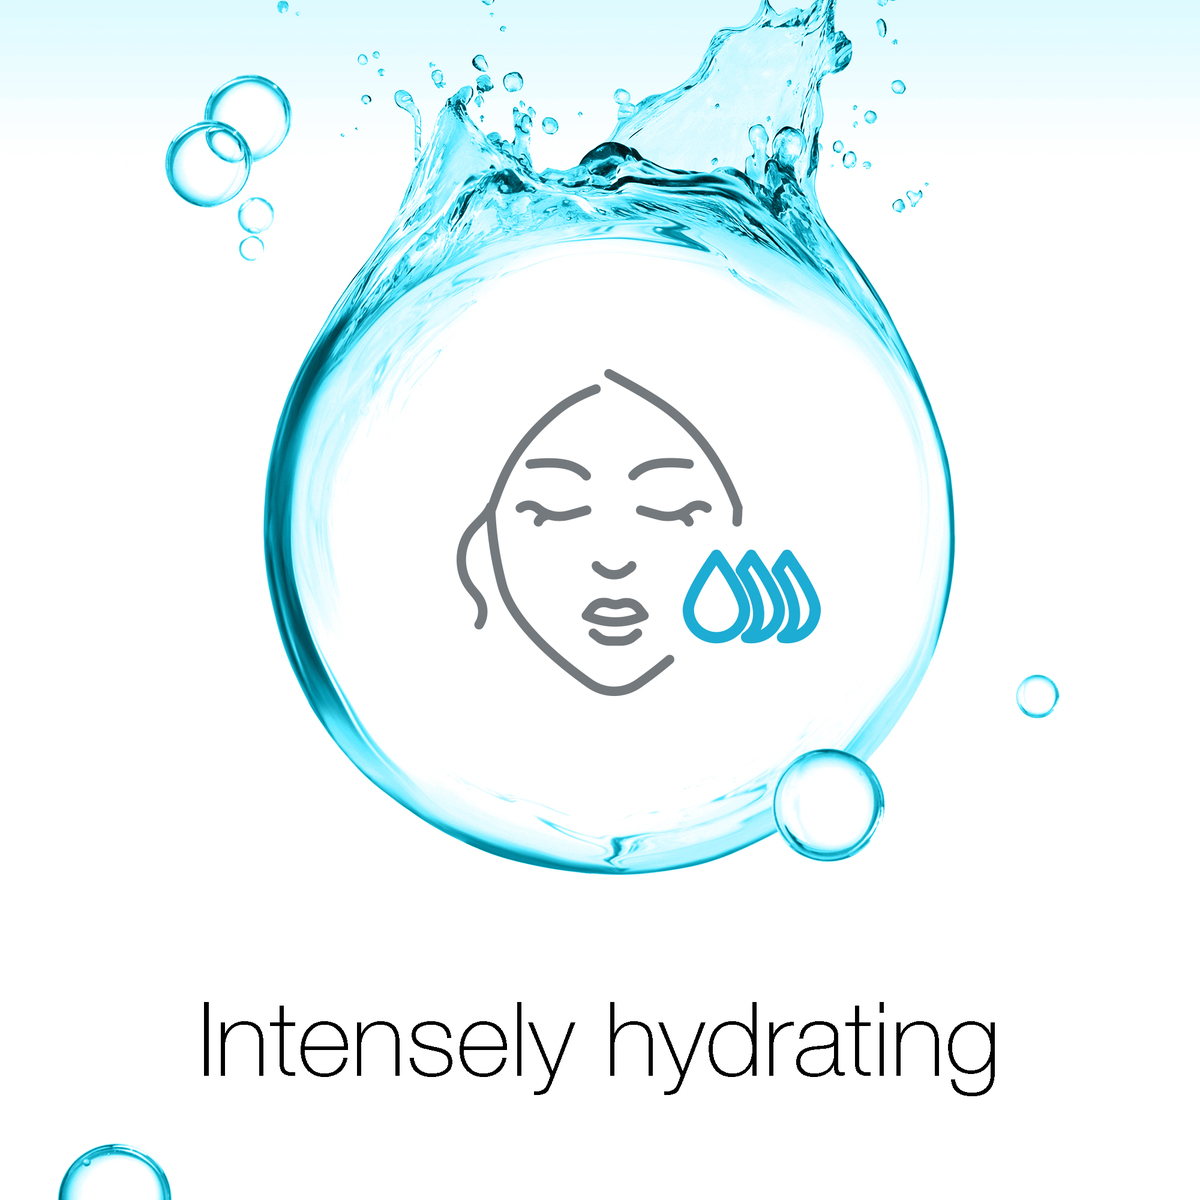 Neutrogena Cleansing Water Gel Hydro Boost Normal to Dry Skin 200 ml